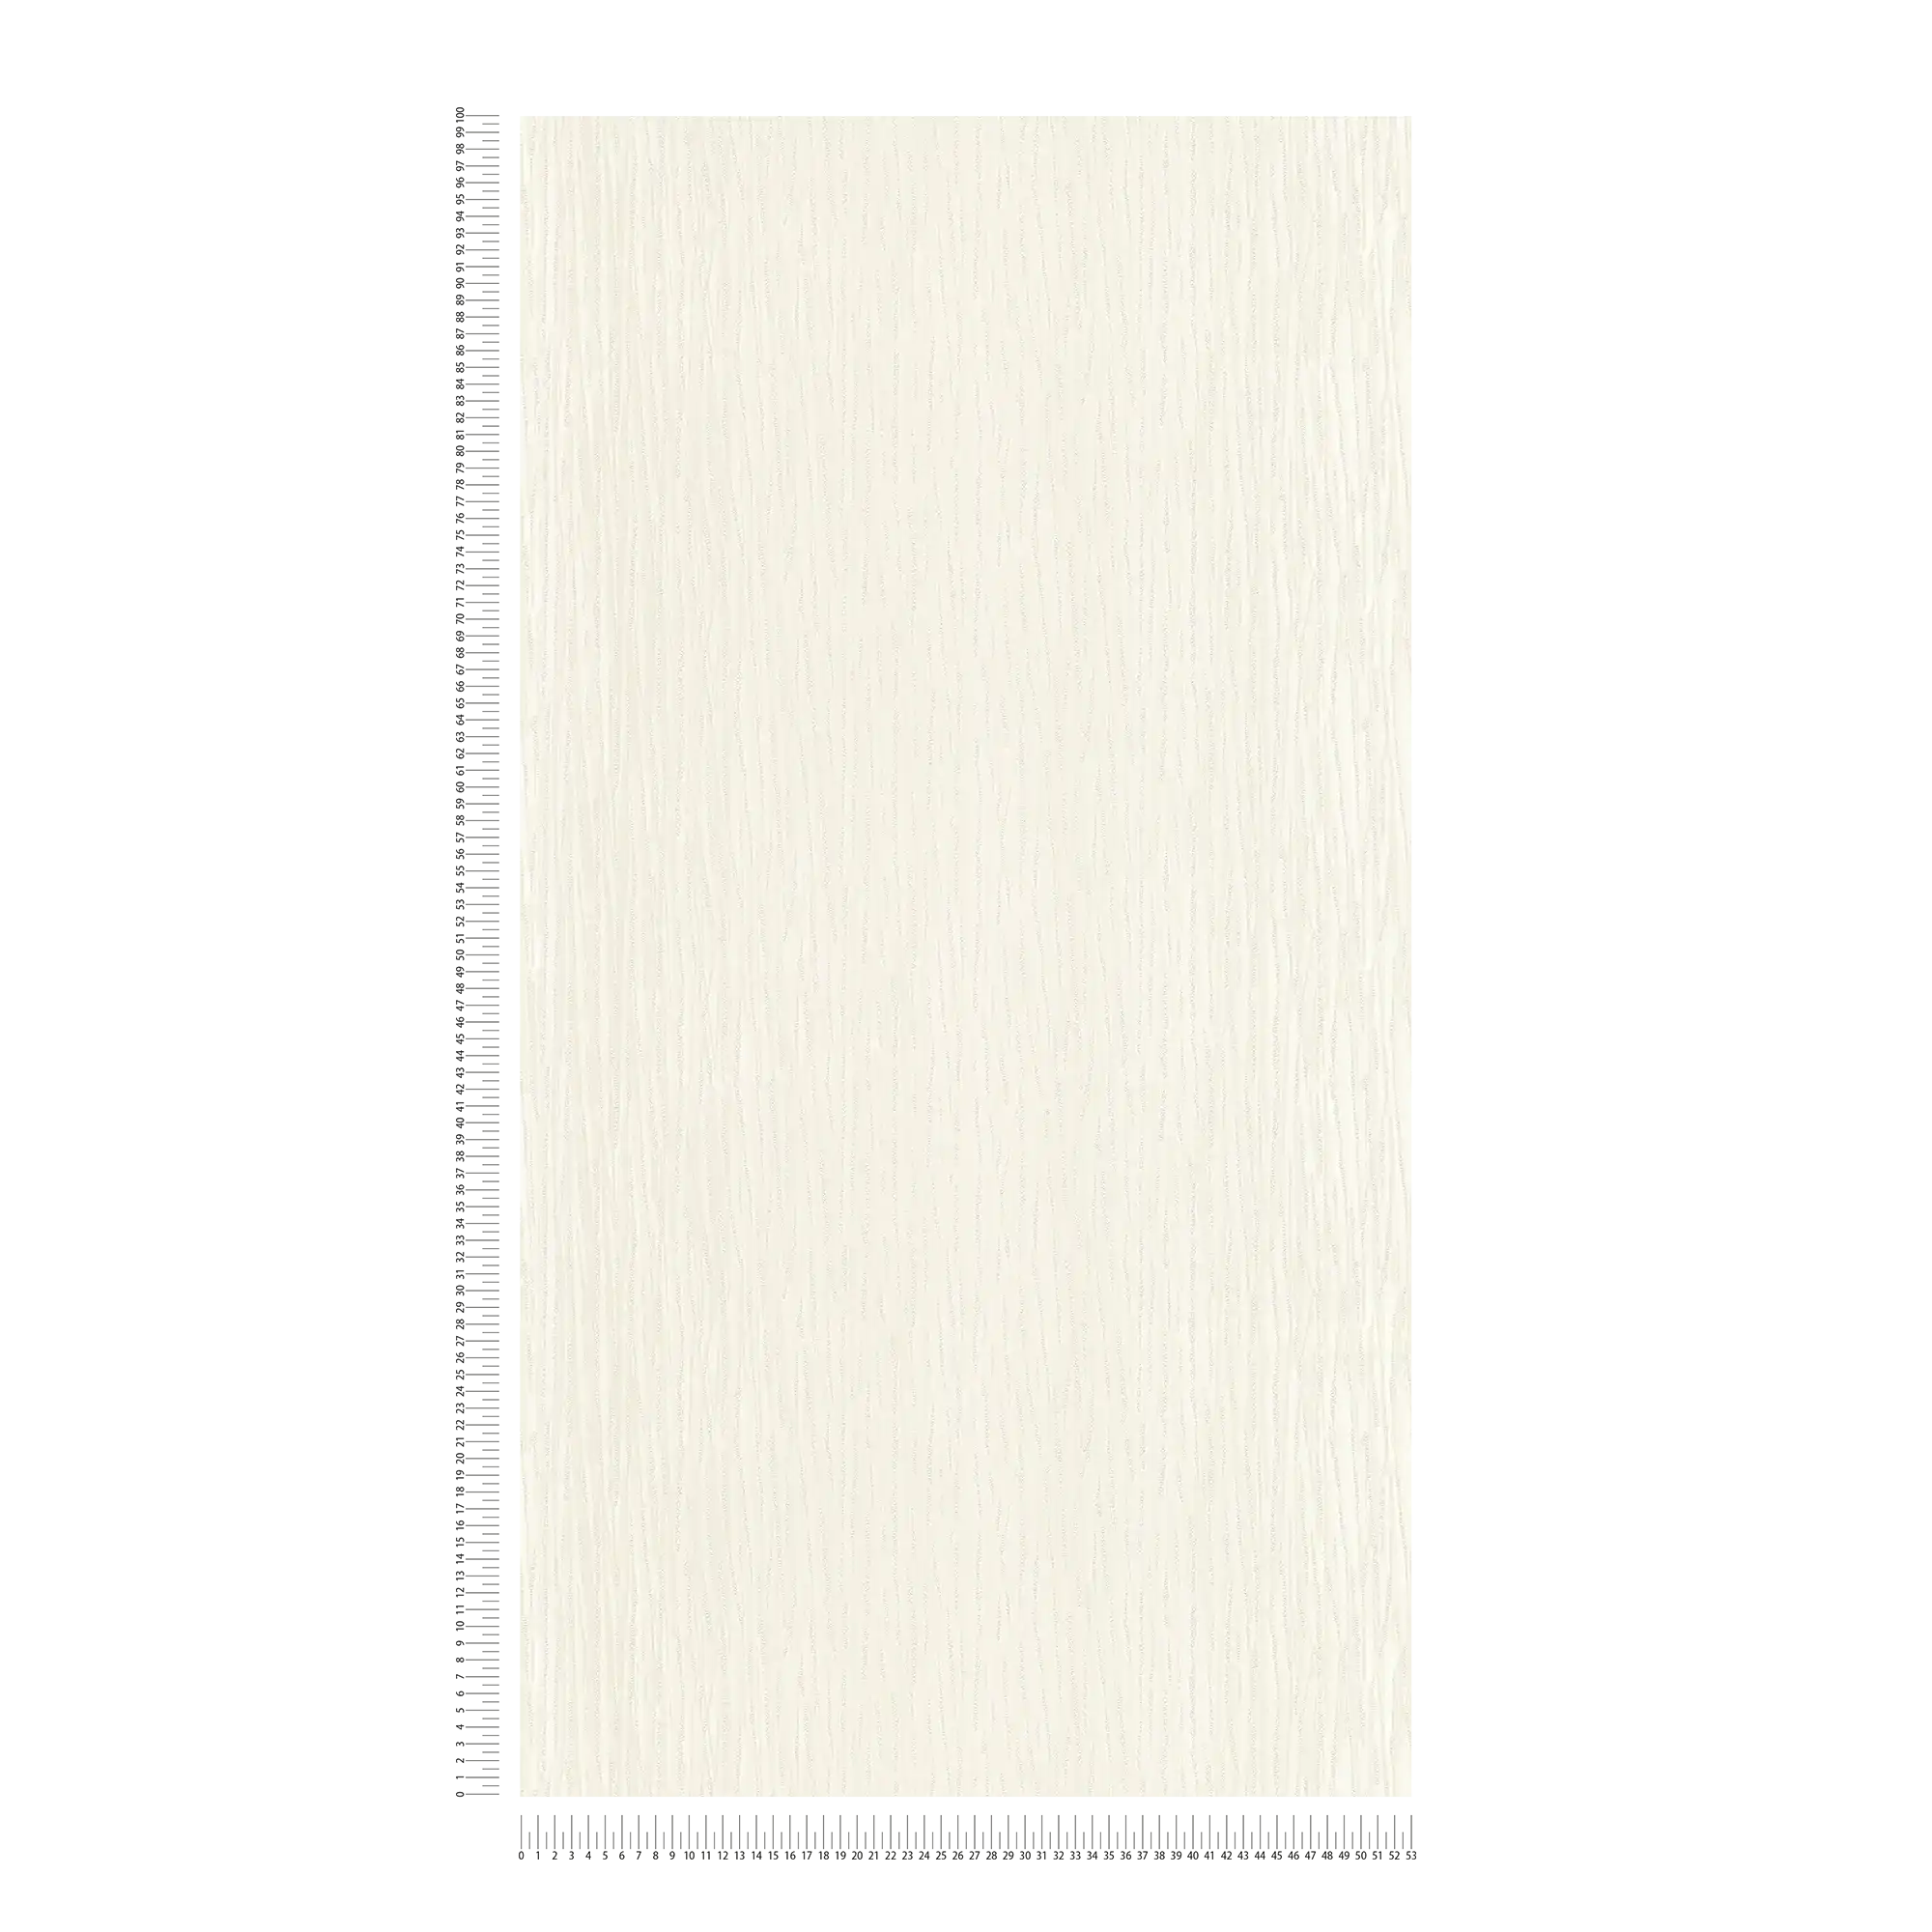             Plain wallpaper cream with metallic luster & hatch design
        